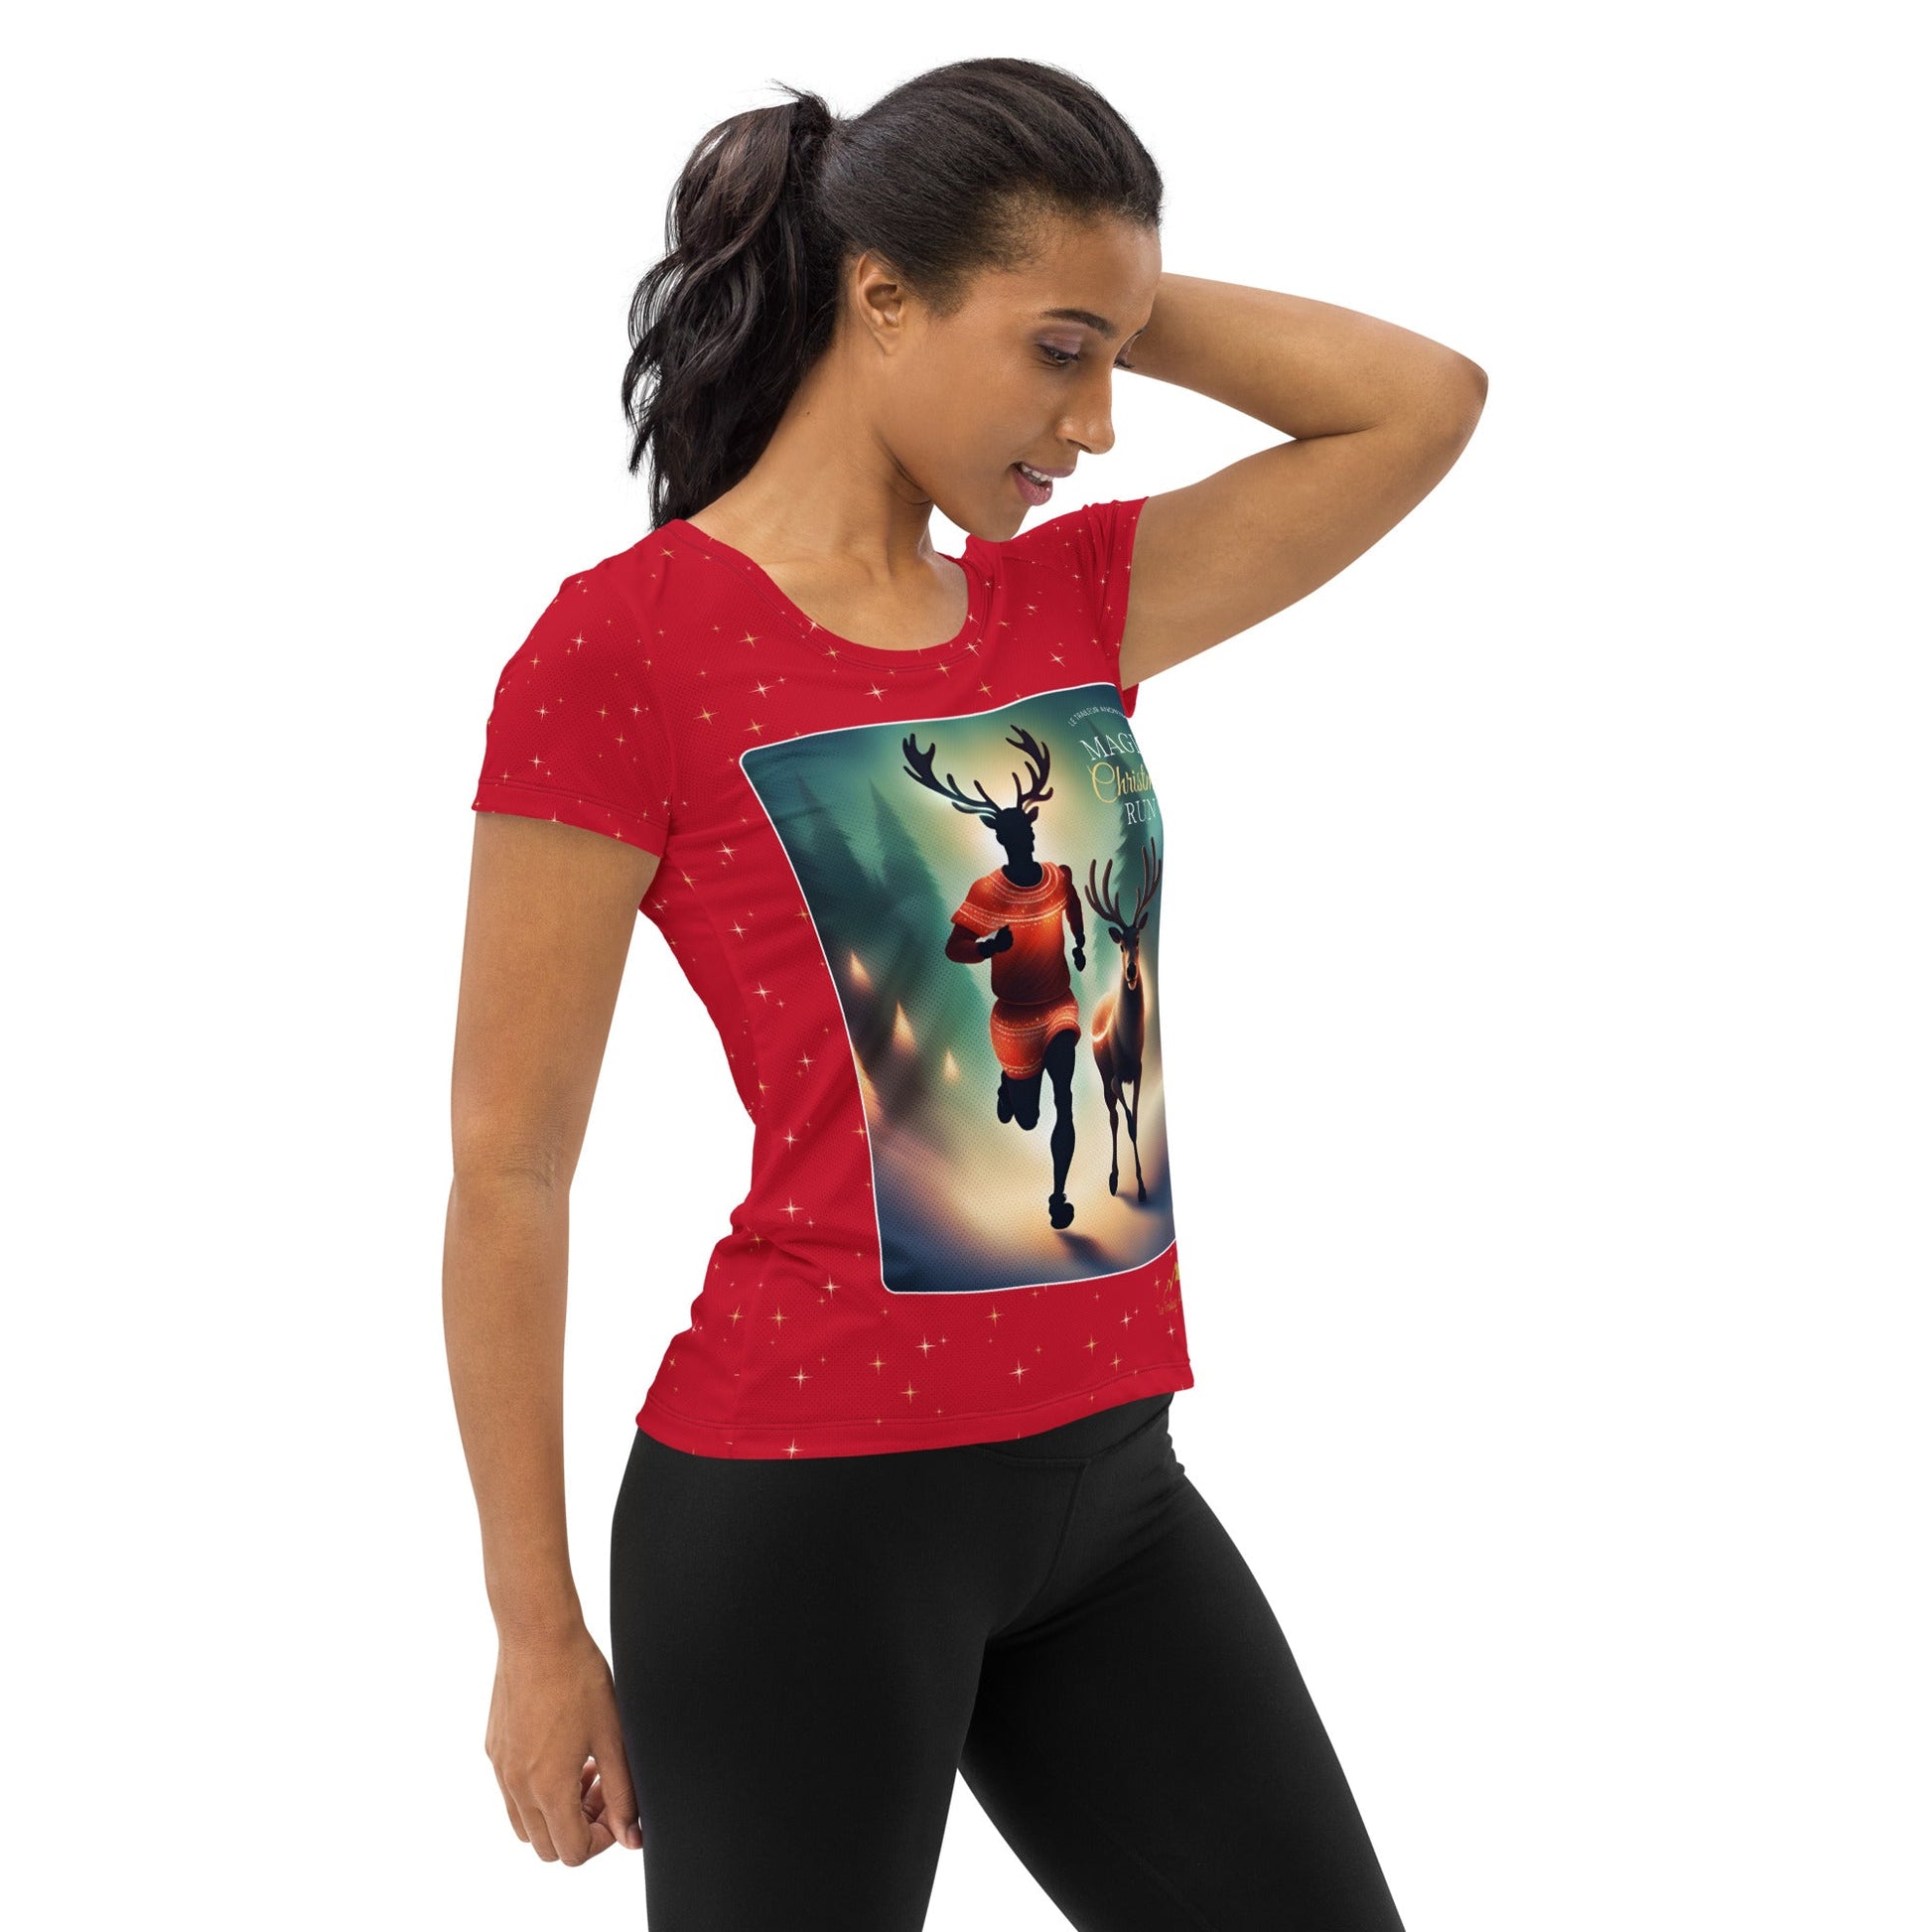 T-Shirt Running - Christmas Run - Red - Femme - Le Traileur Anonyme